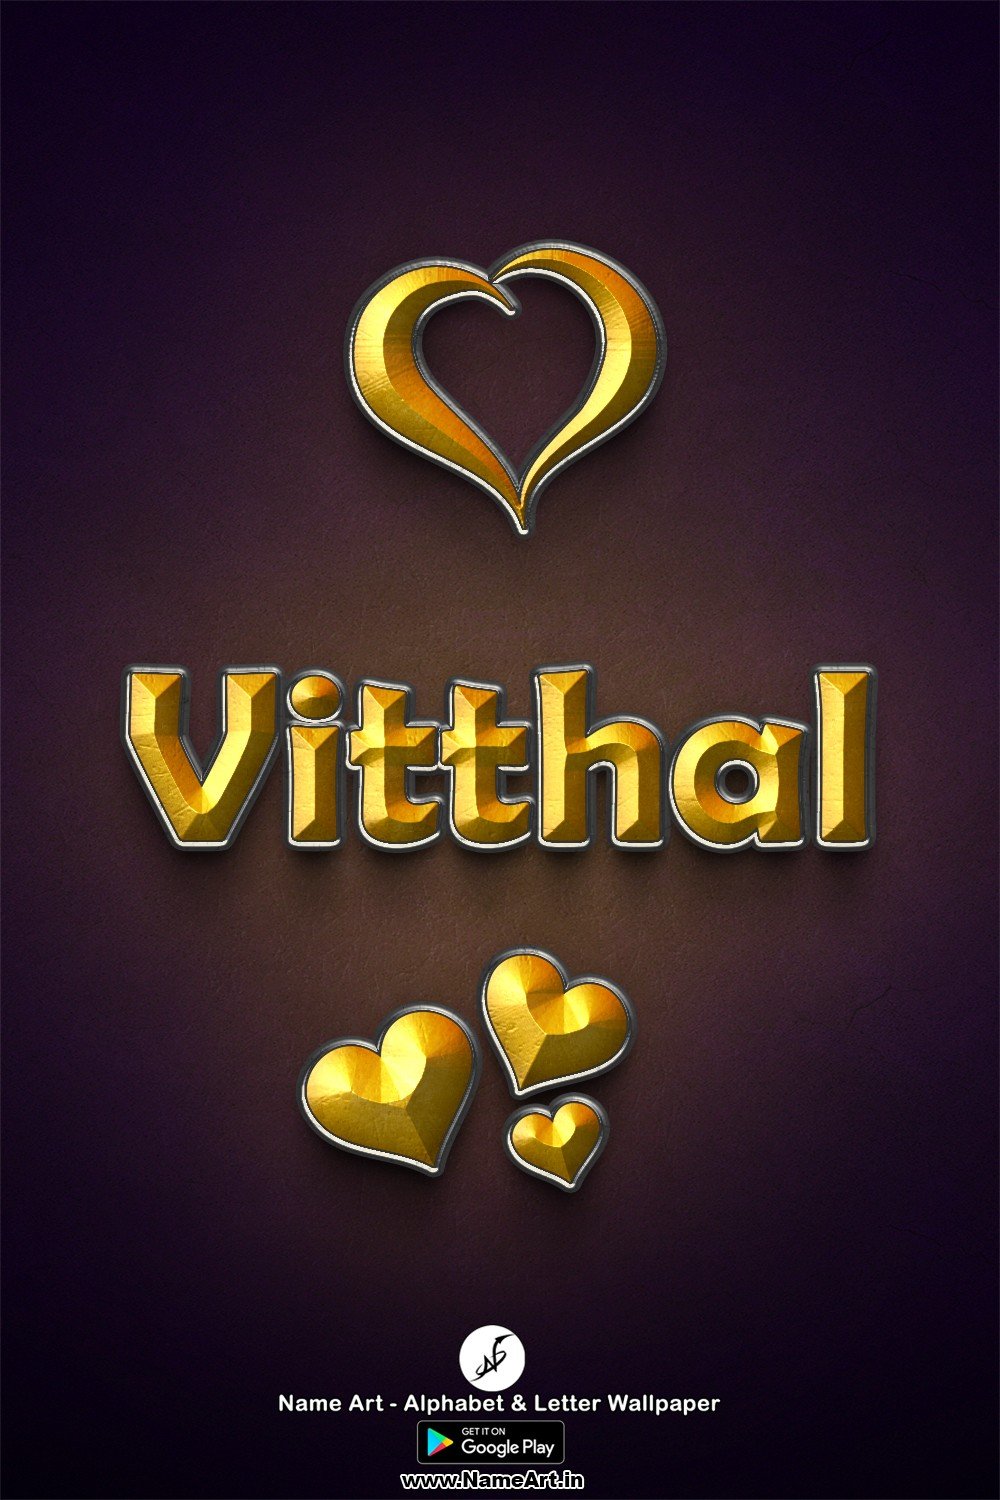 Vitthal | Whatsapp Status Vitthal | Name Art DP Vitthal